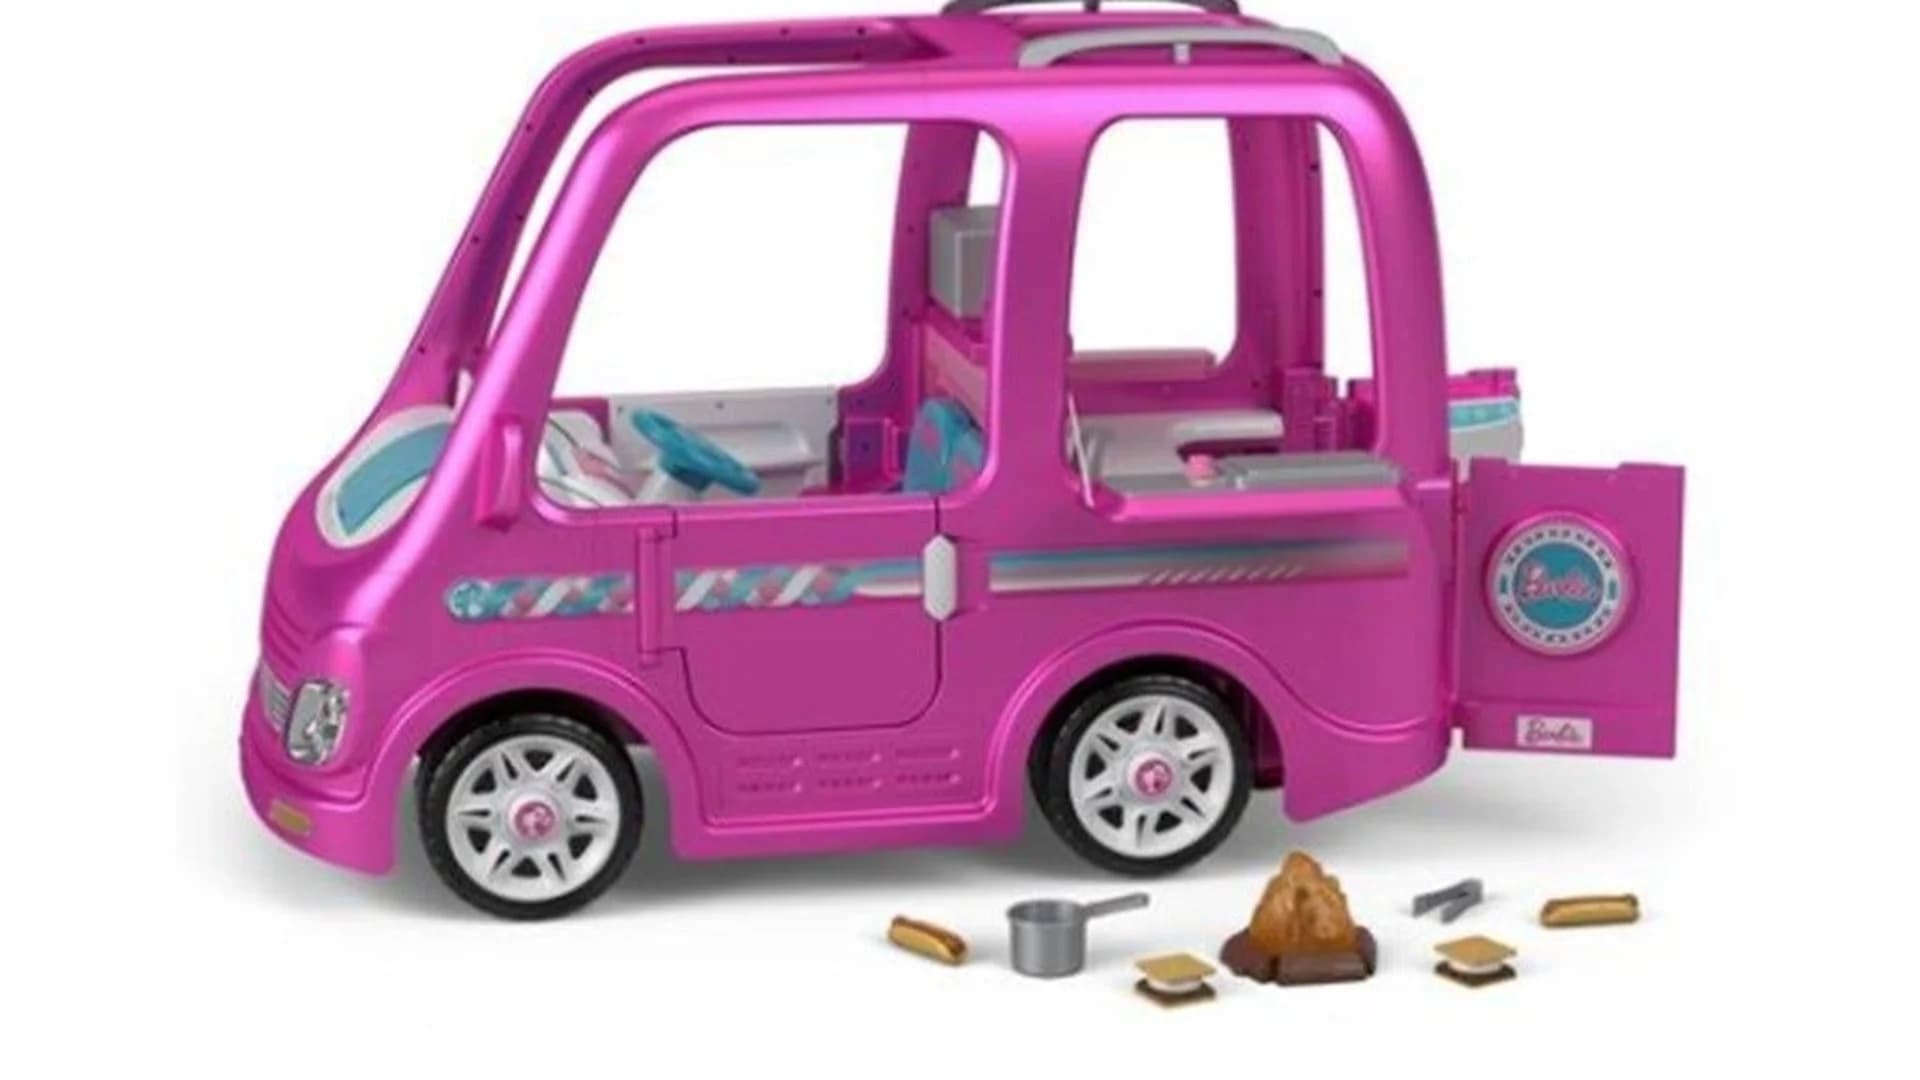 Fisher-Price recalls Power Wheels Barbie Campers